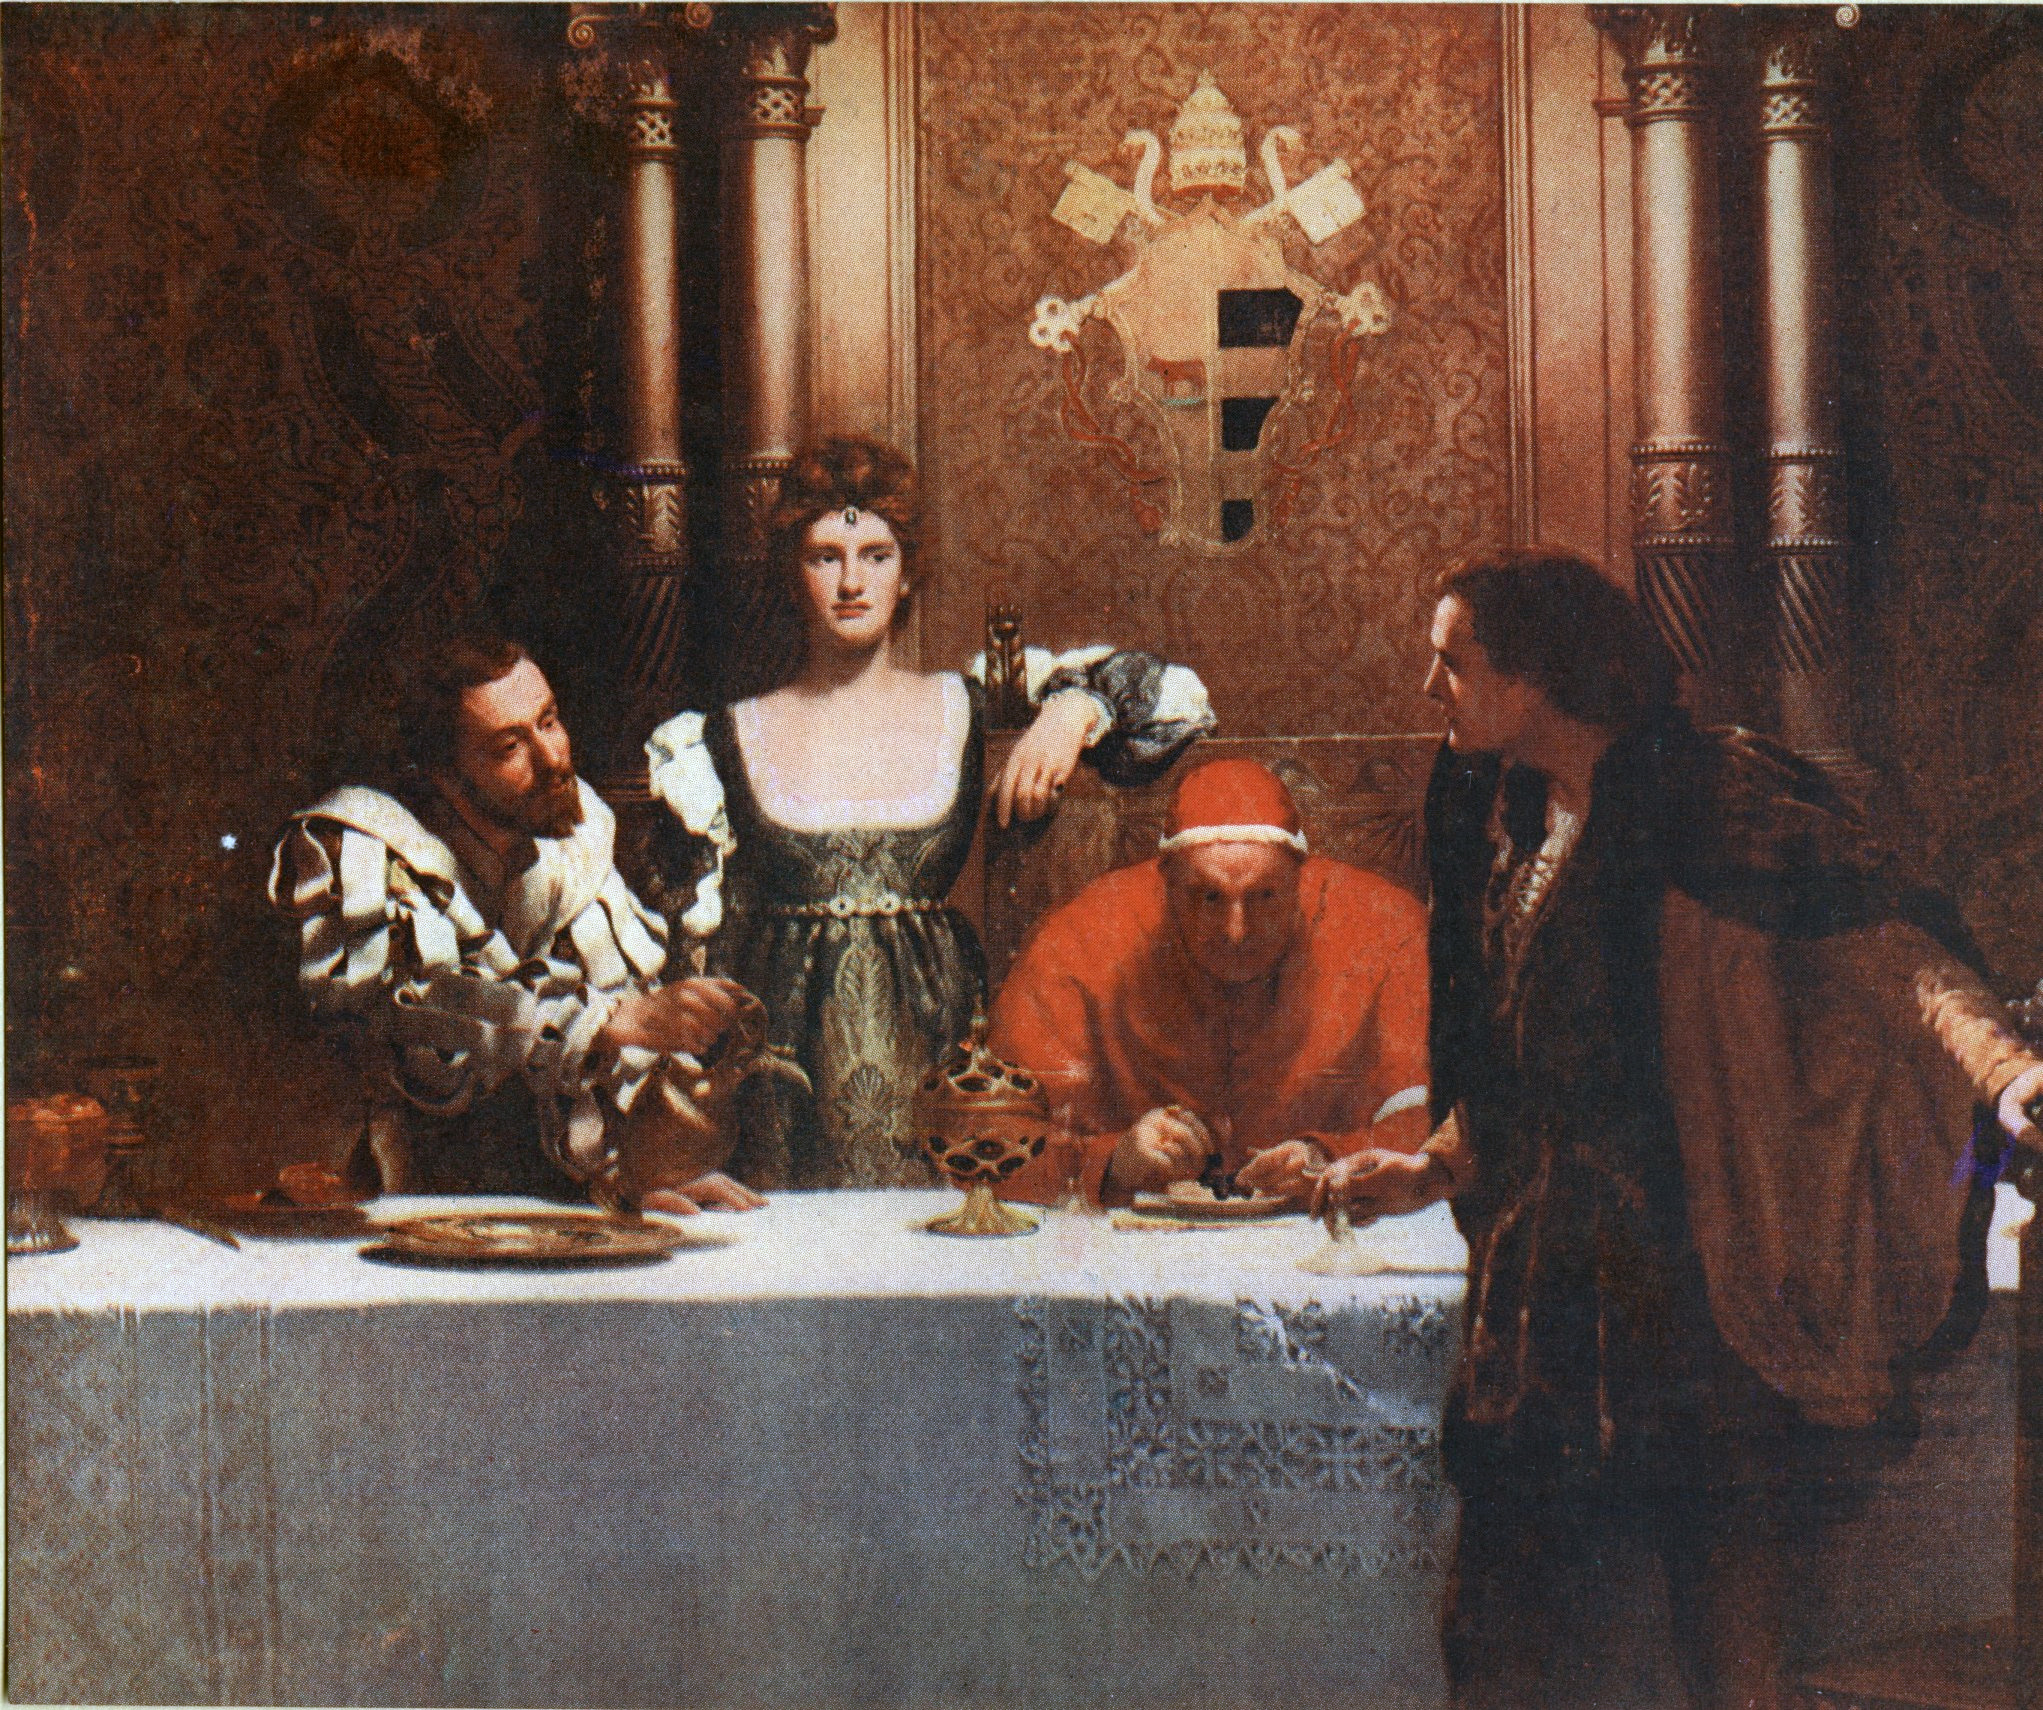 File:A Glass of Wine with Caesar Borgia - John Collier.jpg - Wikipedia